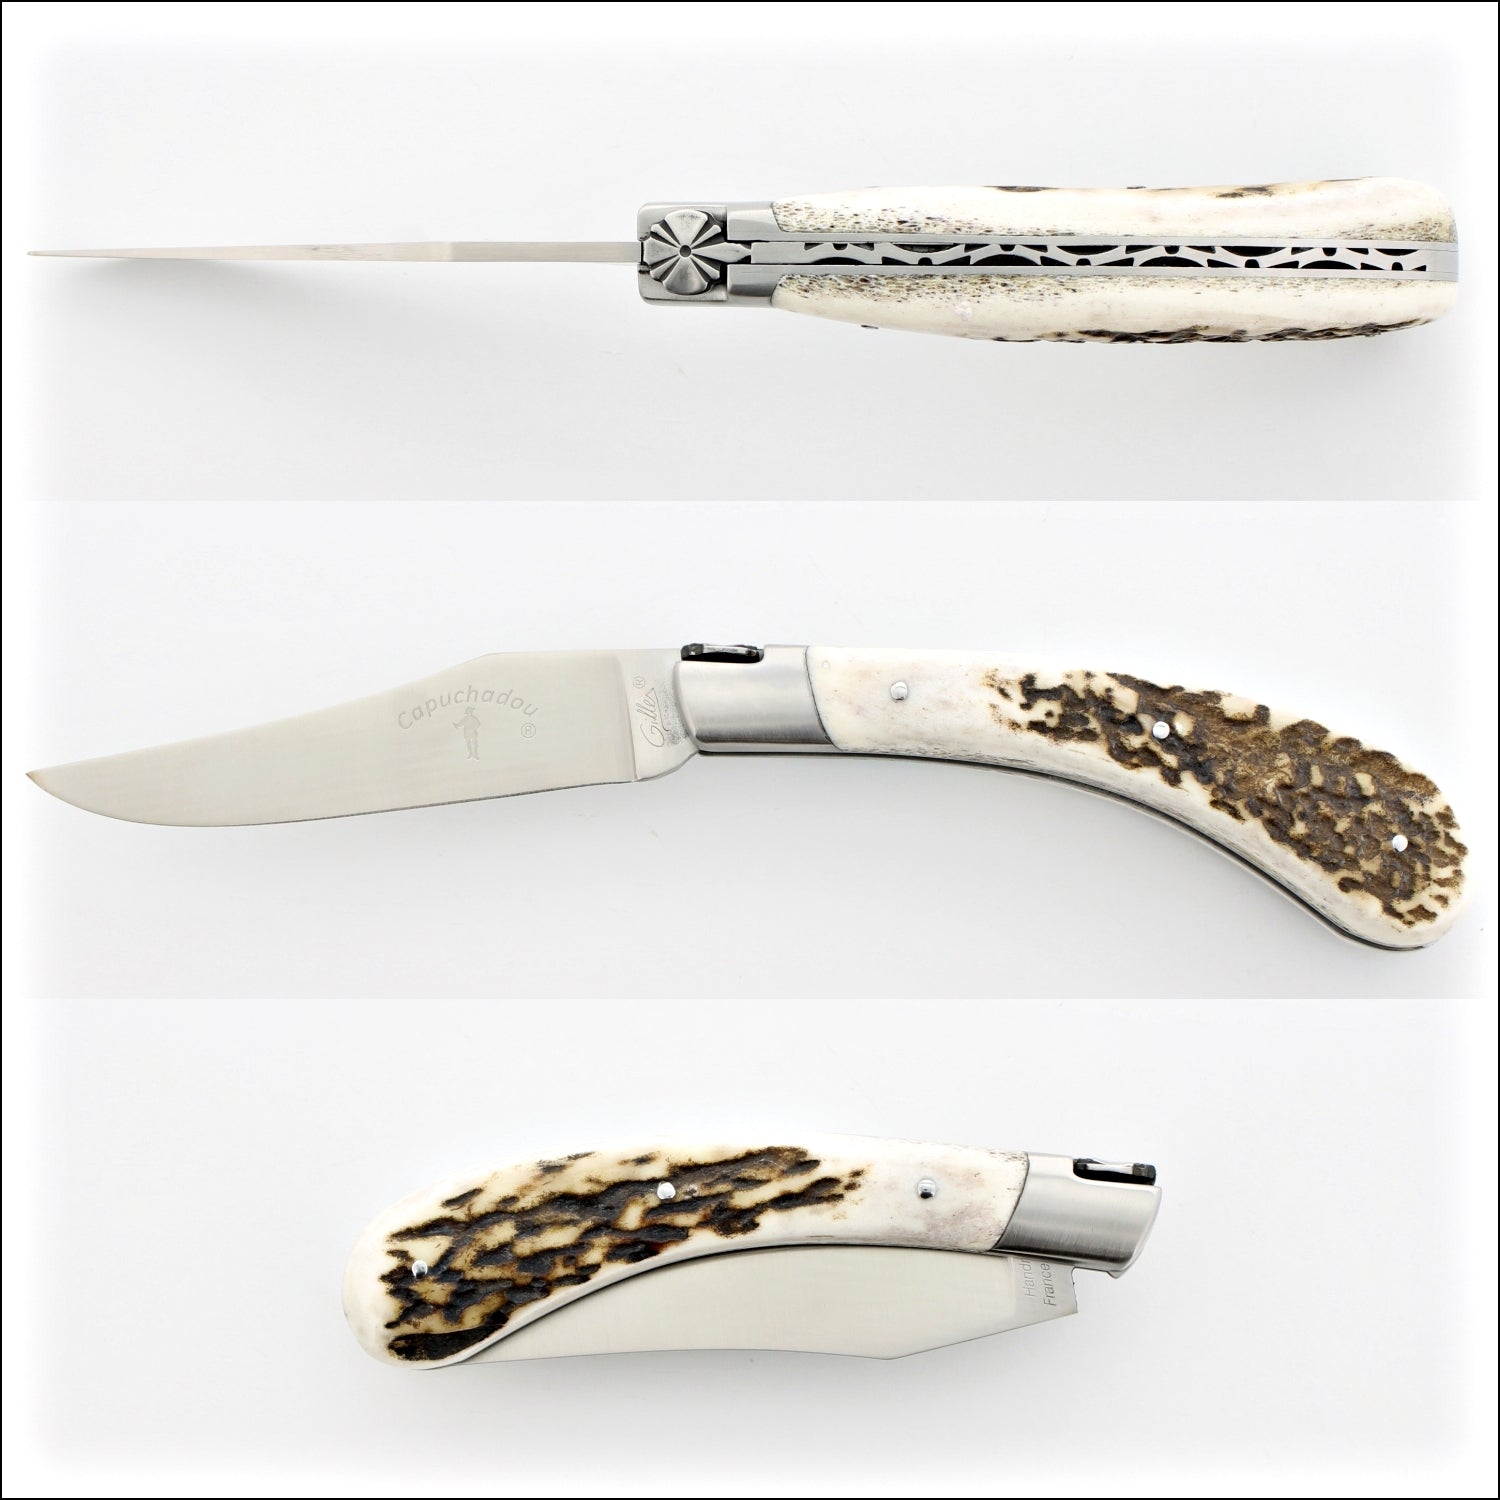 Capuchadou 12 cm Classic Folding Knife - Deer Stag